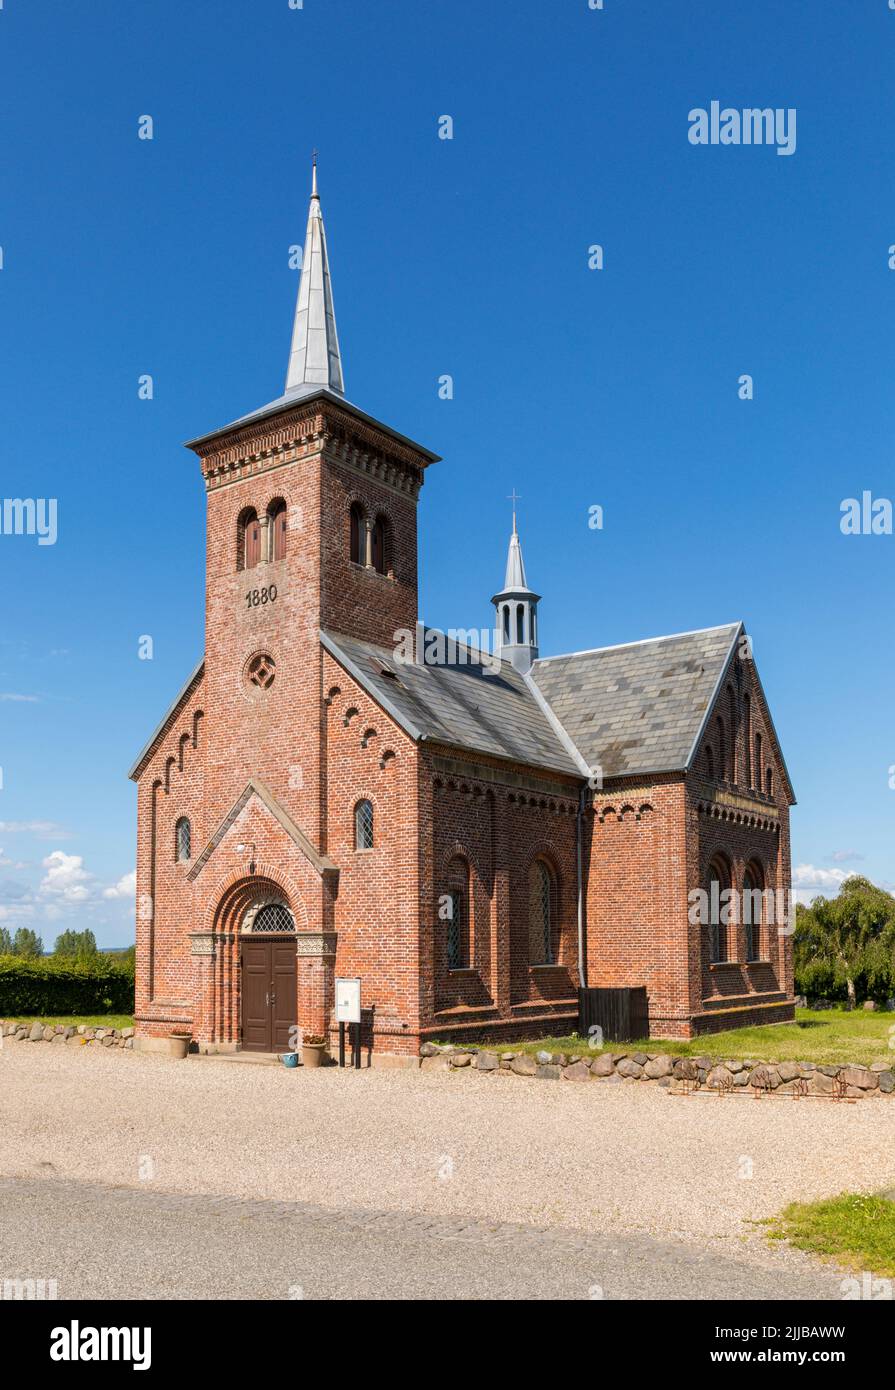 Ristinge Kapel, piccola chiesa in mattoni a Humble Sogn, Langeland, Dänemark Foto Stock